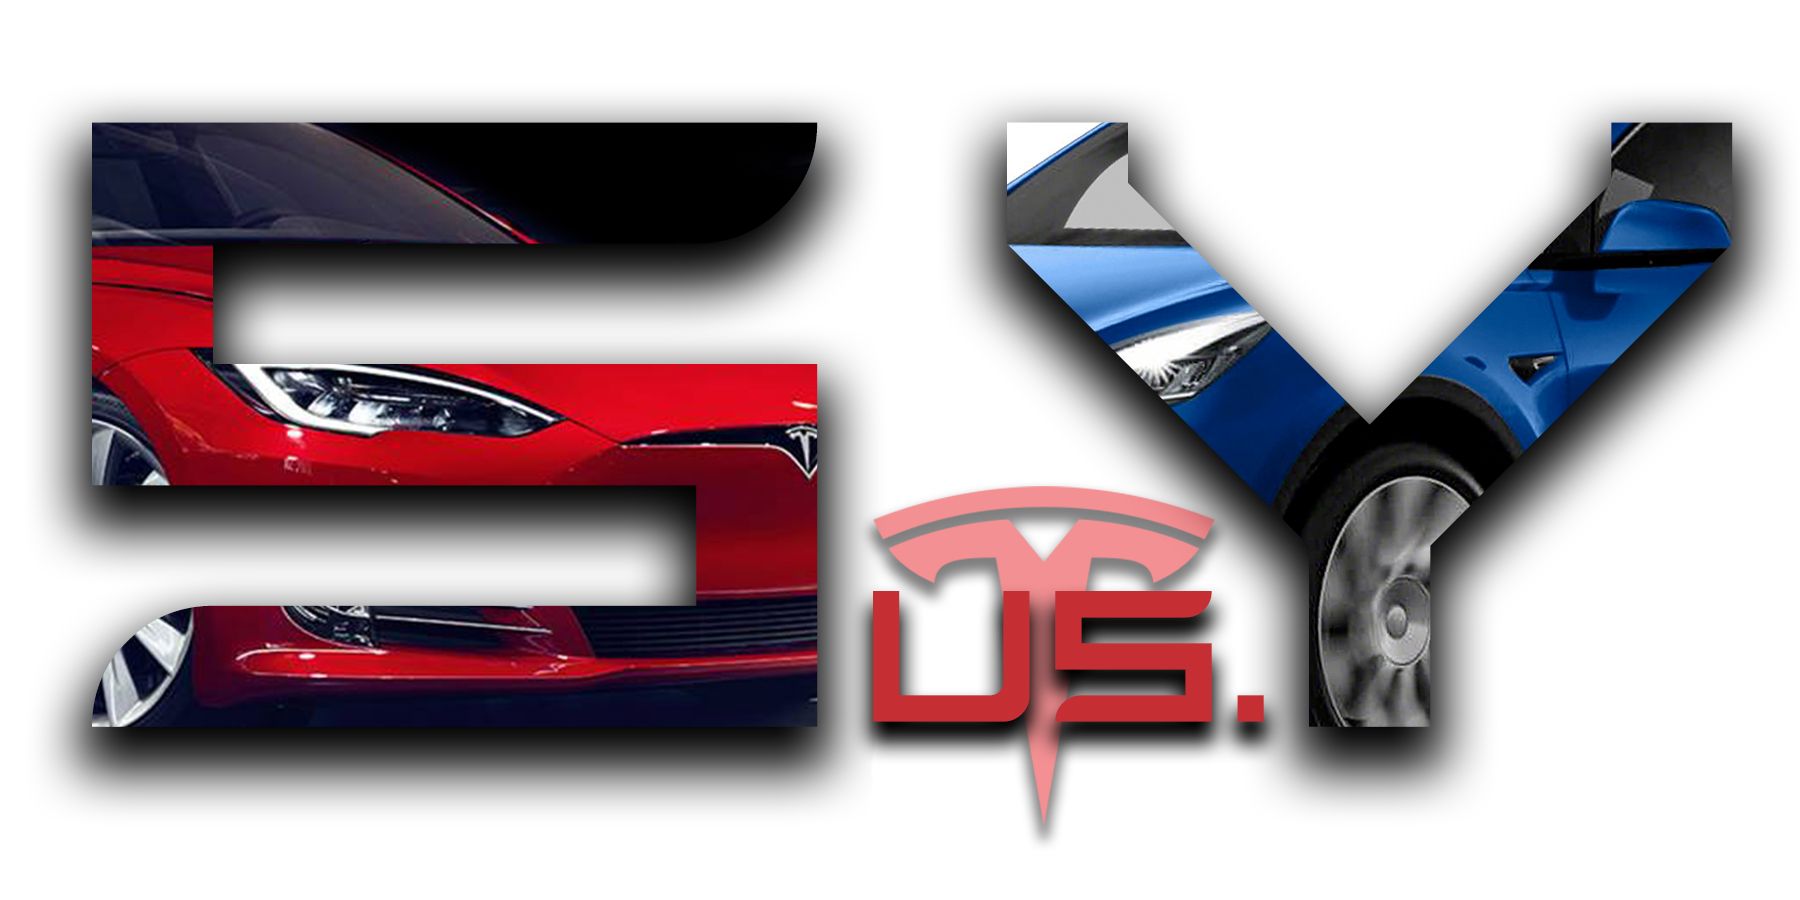 Tesla Model S vs. Y